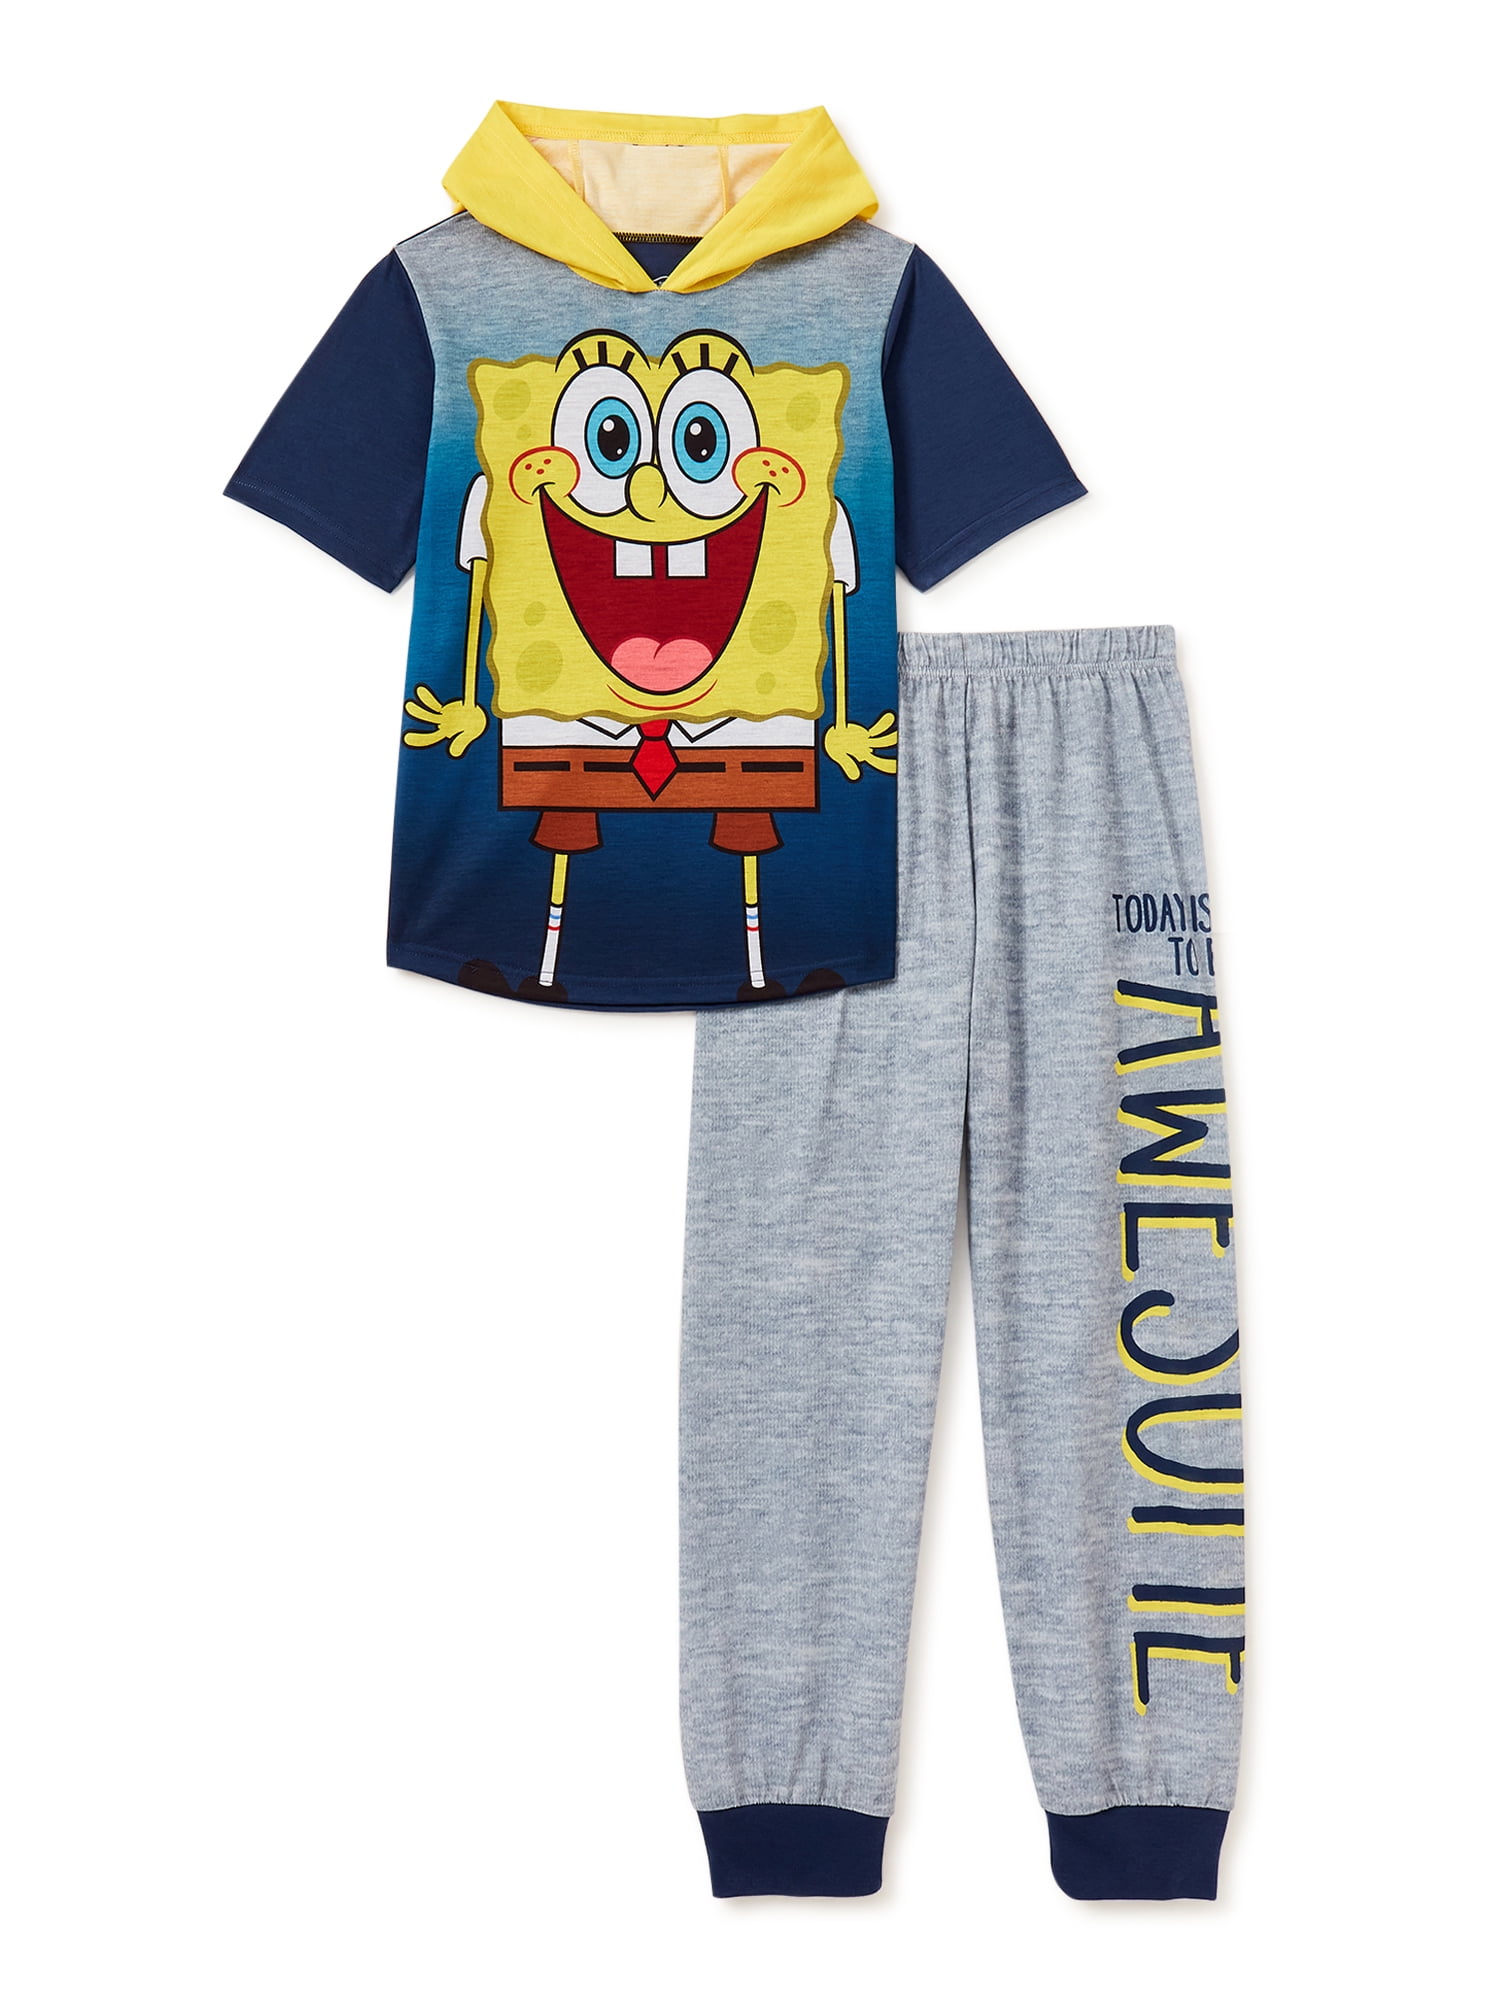 Nickelodeon Spongebob Squarepants Boys 2 Piece Fleece Pants Sets (Yellow  Hoodie, Sizes 2T-8) 